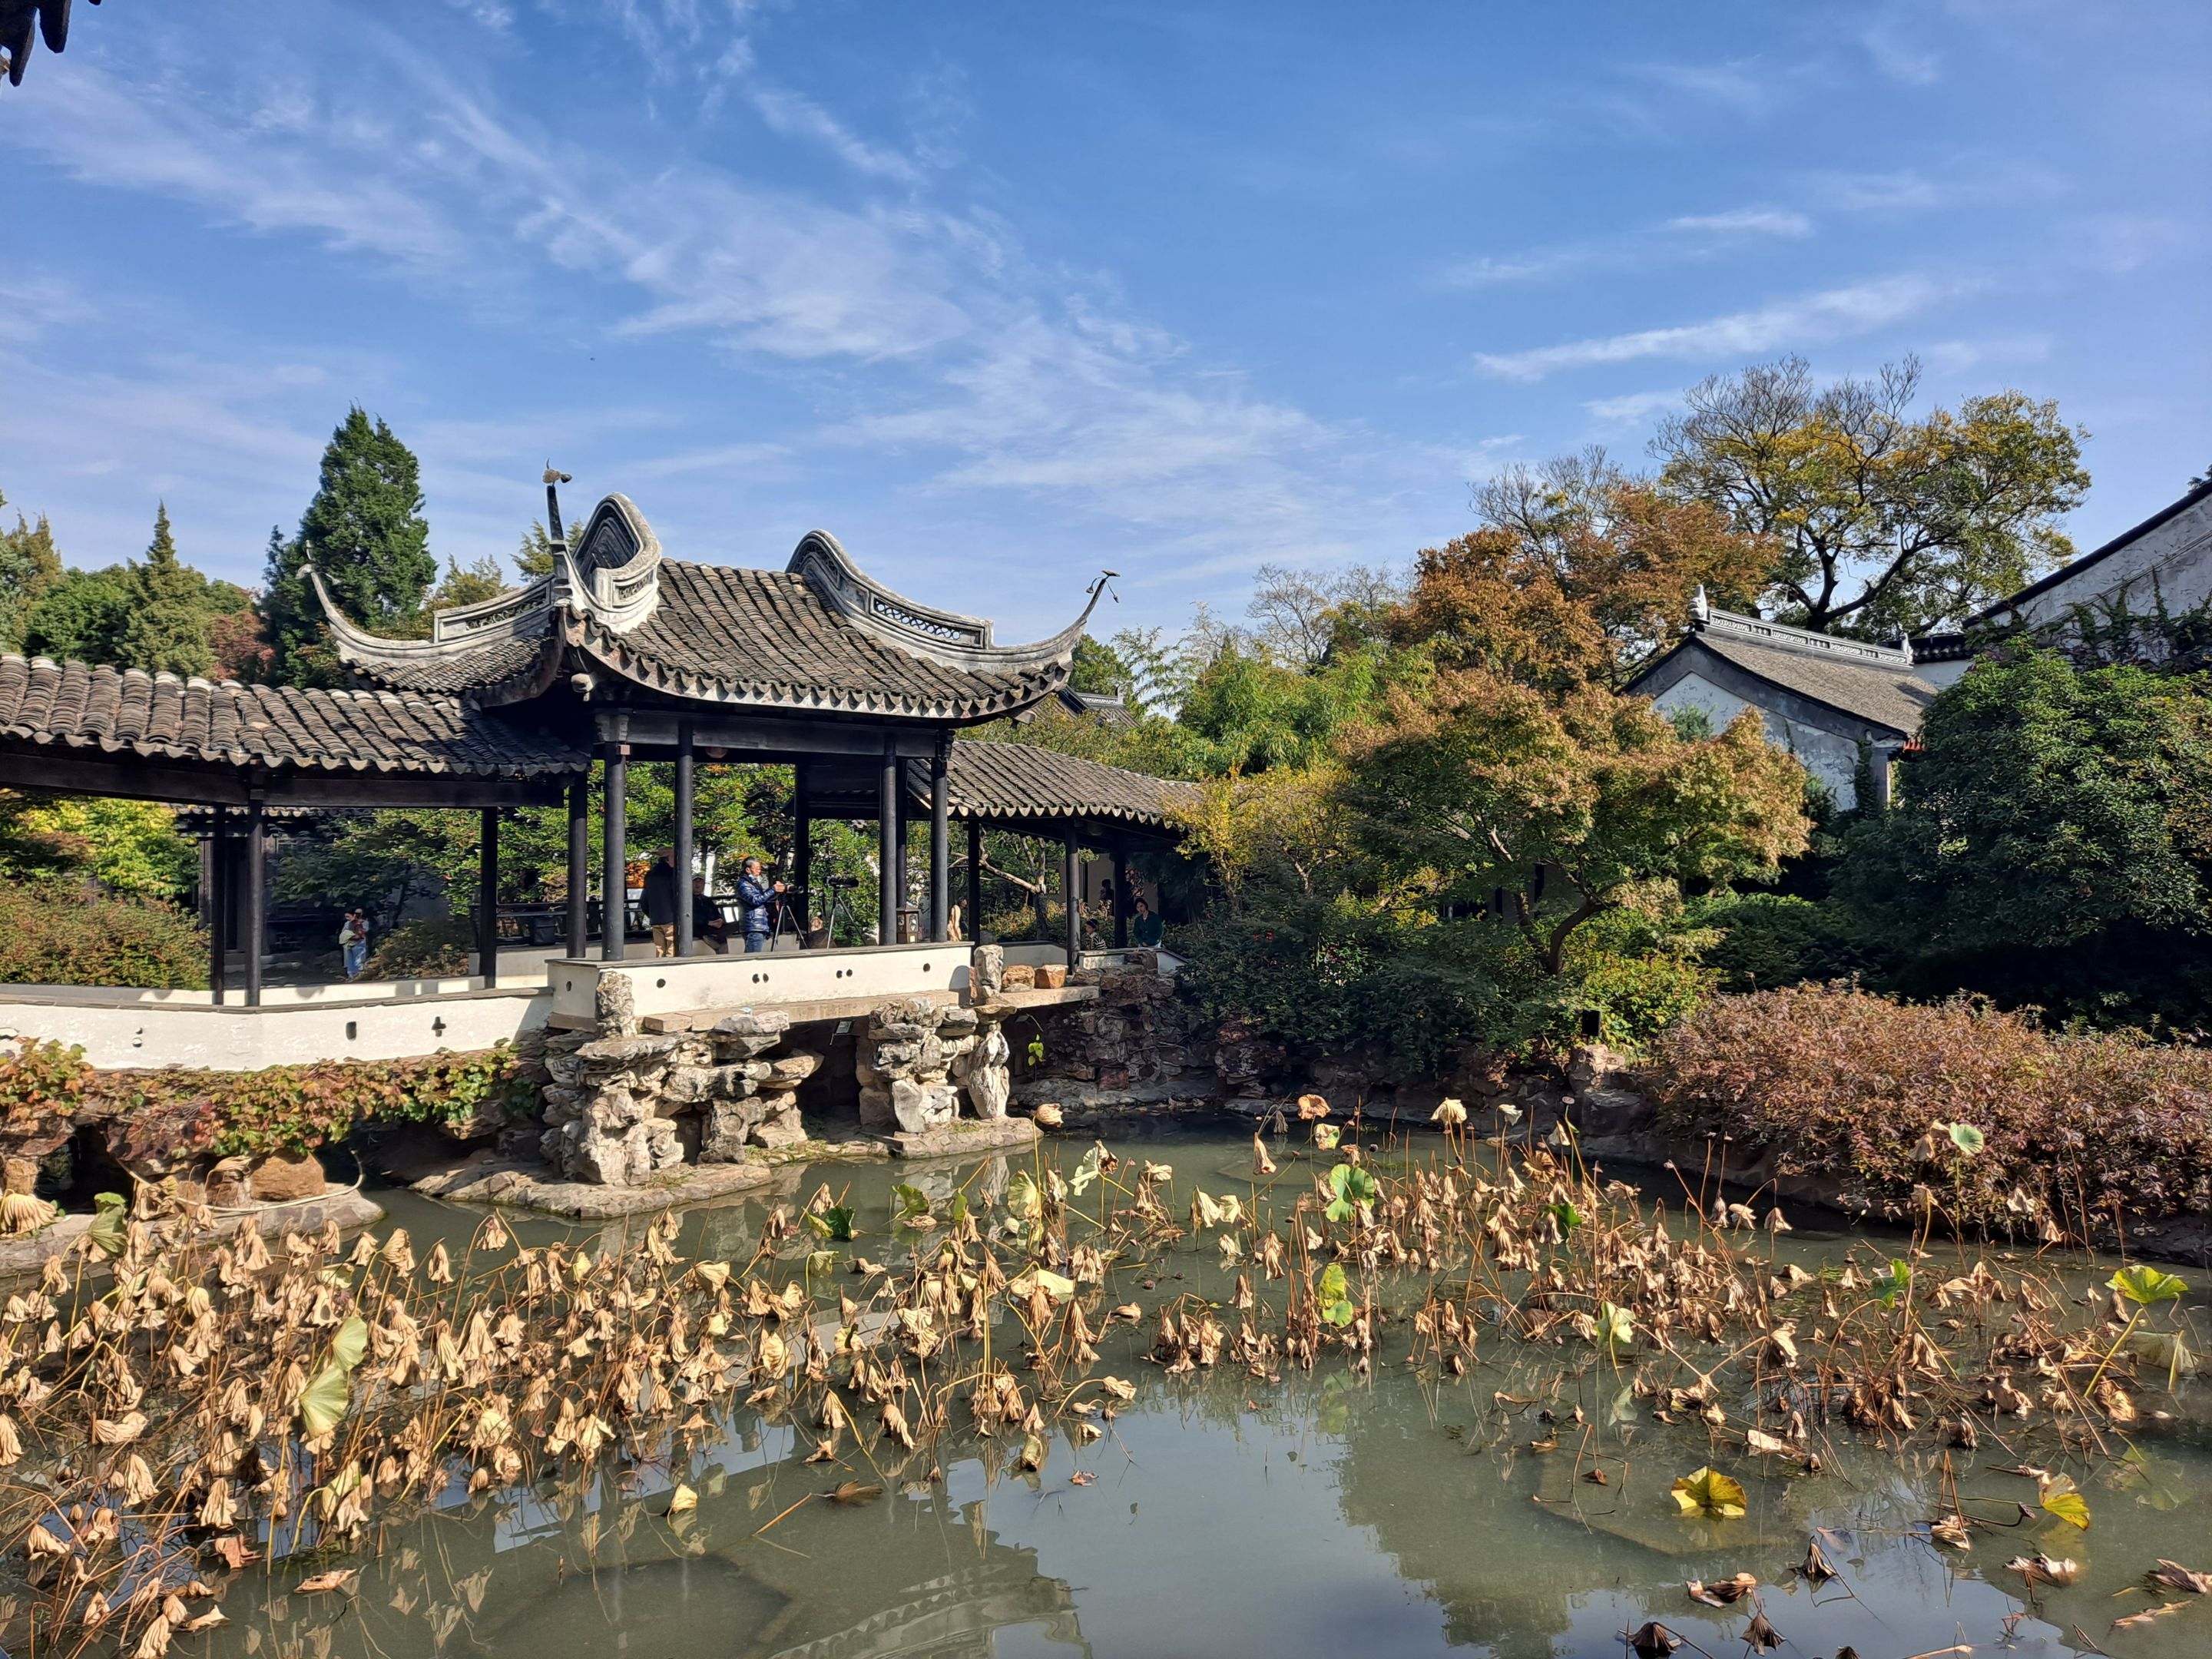 Xihui Park: A Tranquil Oasis